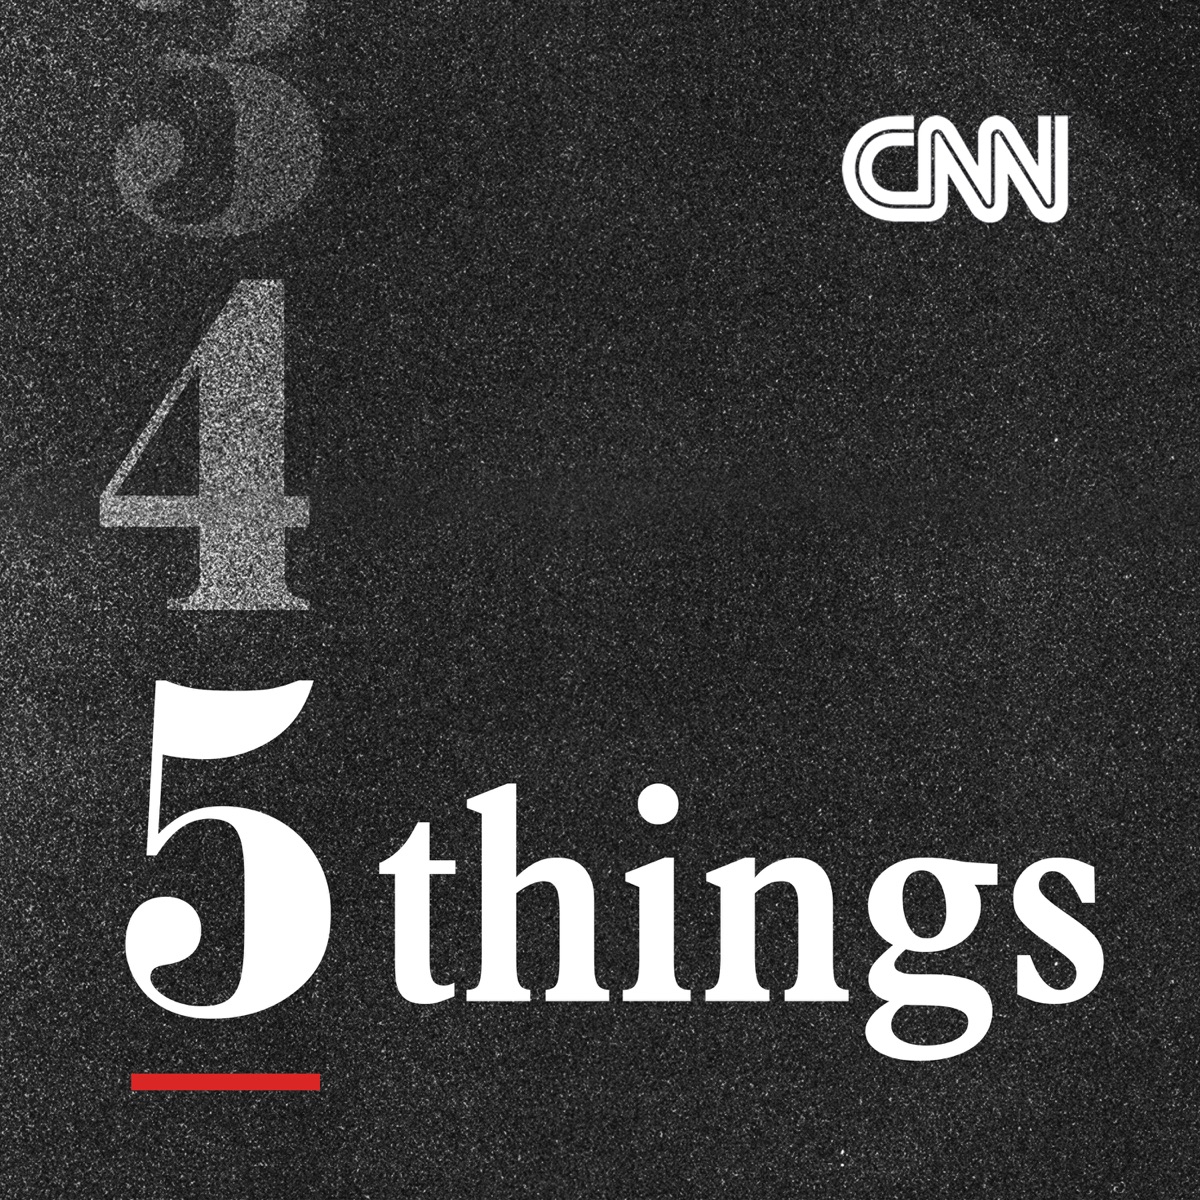 CNN 5 Things